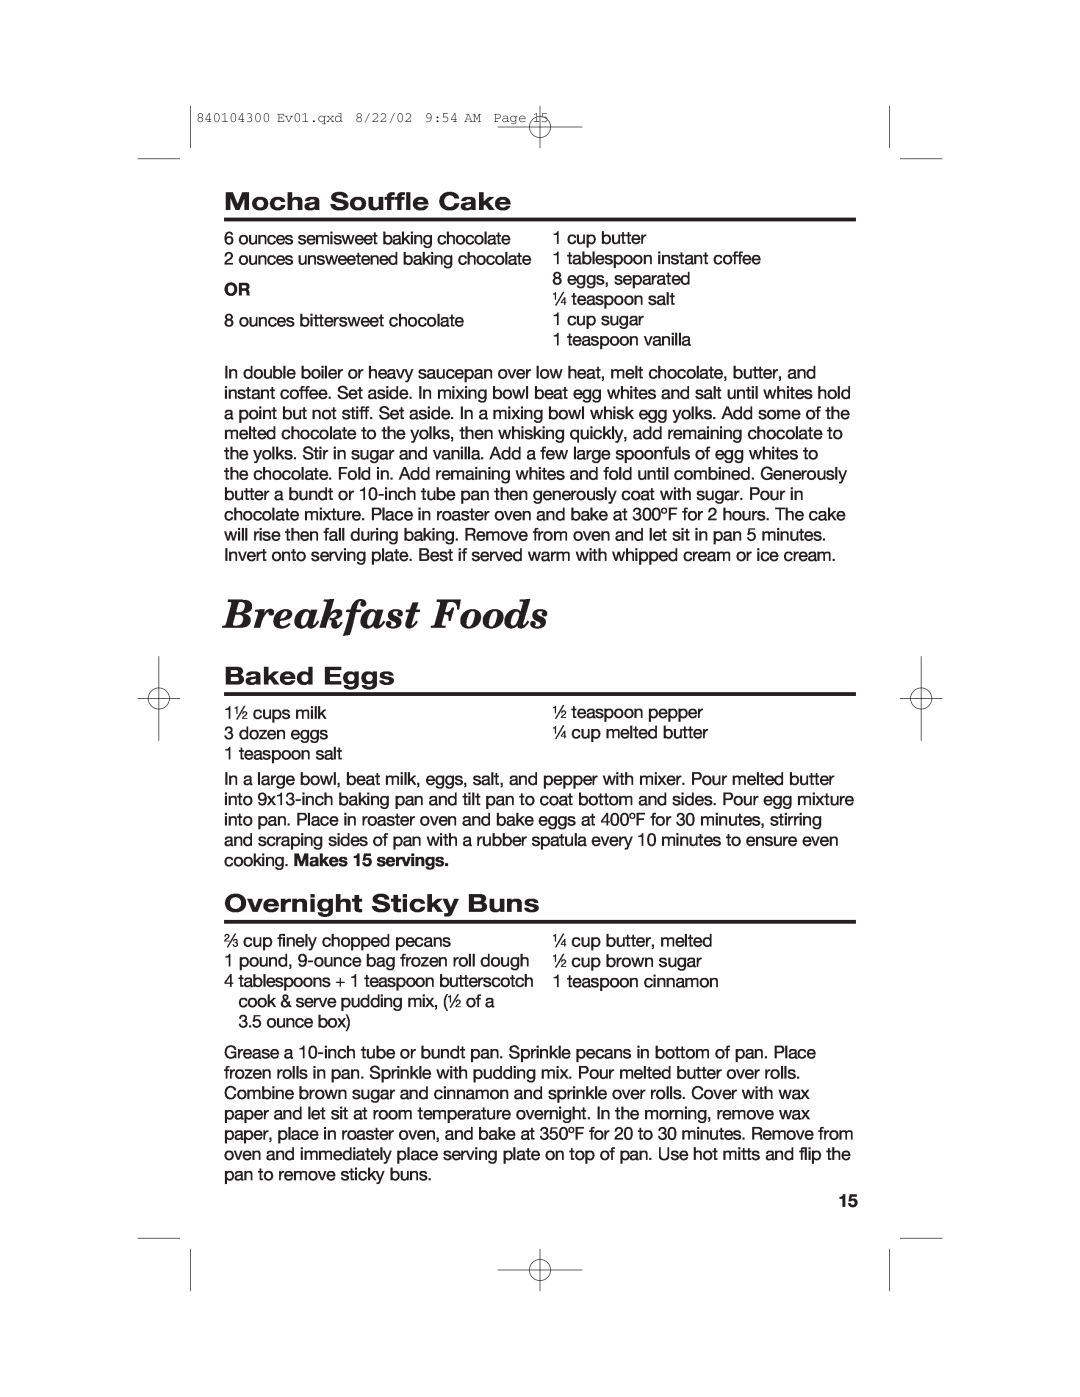 Hamilton Beach 32180C manual Breakfast Foods, Mocha Souffle Cake, Baked Eggs, Overnight Sticky Buns 